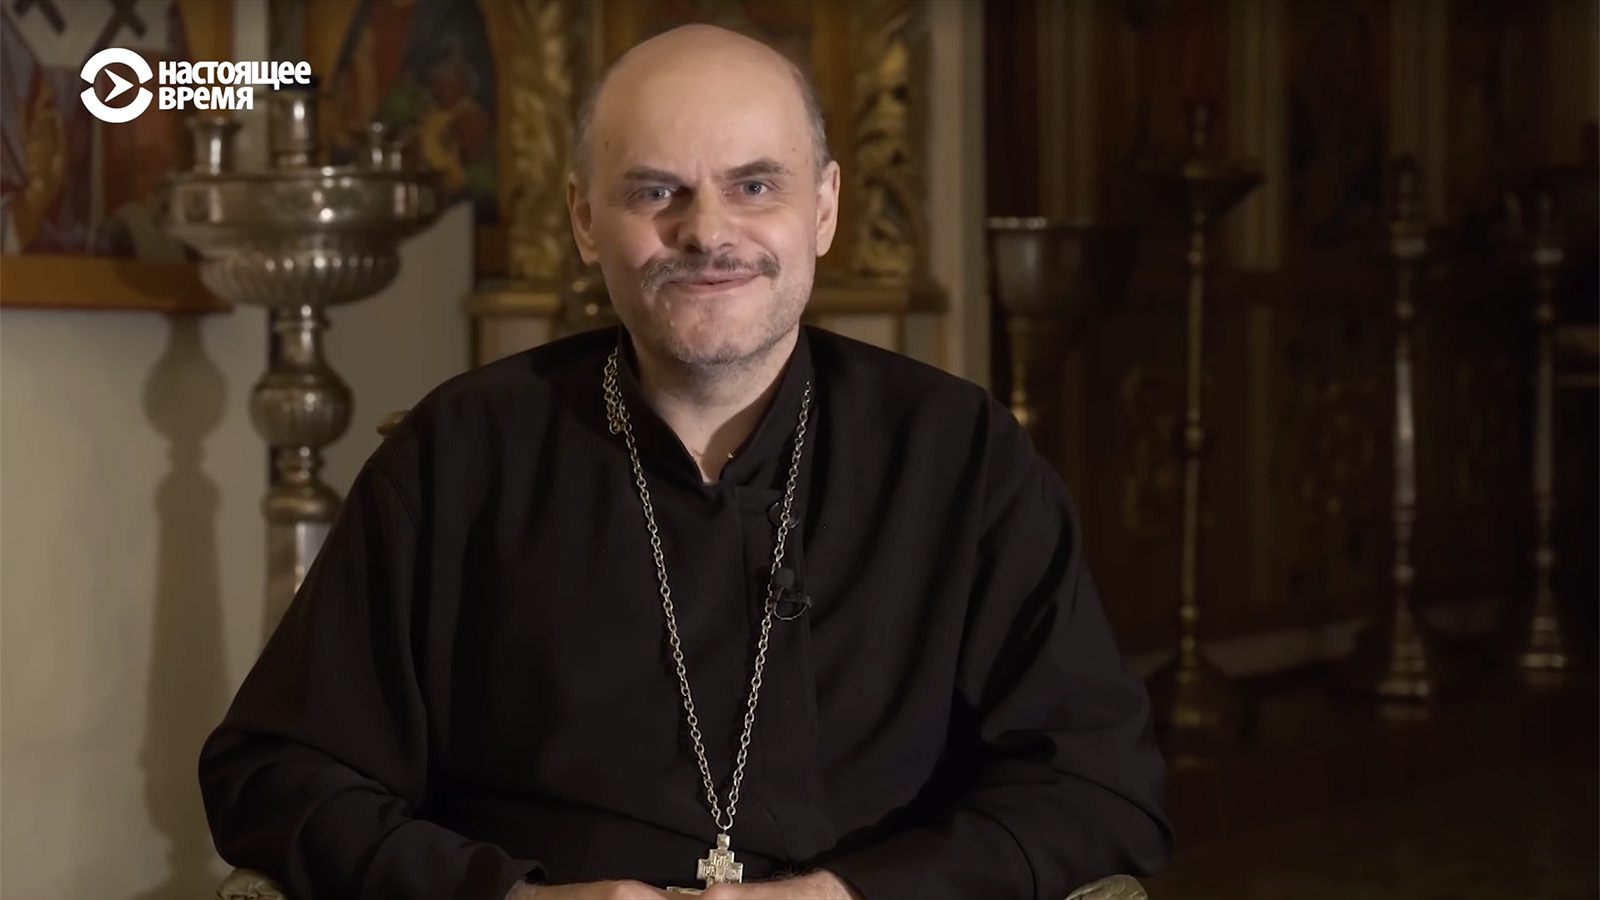 The Rev. John Burdin speaks in a recent interview in Russia. Video screen grab via CurrentTime.tv